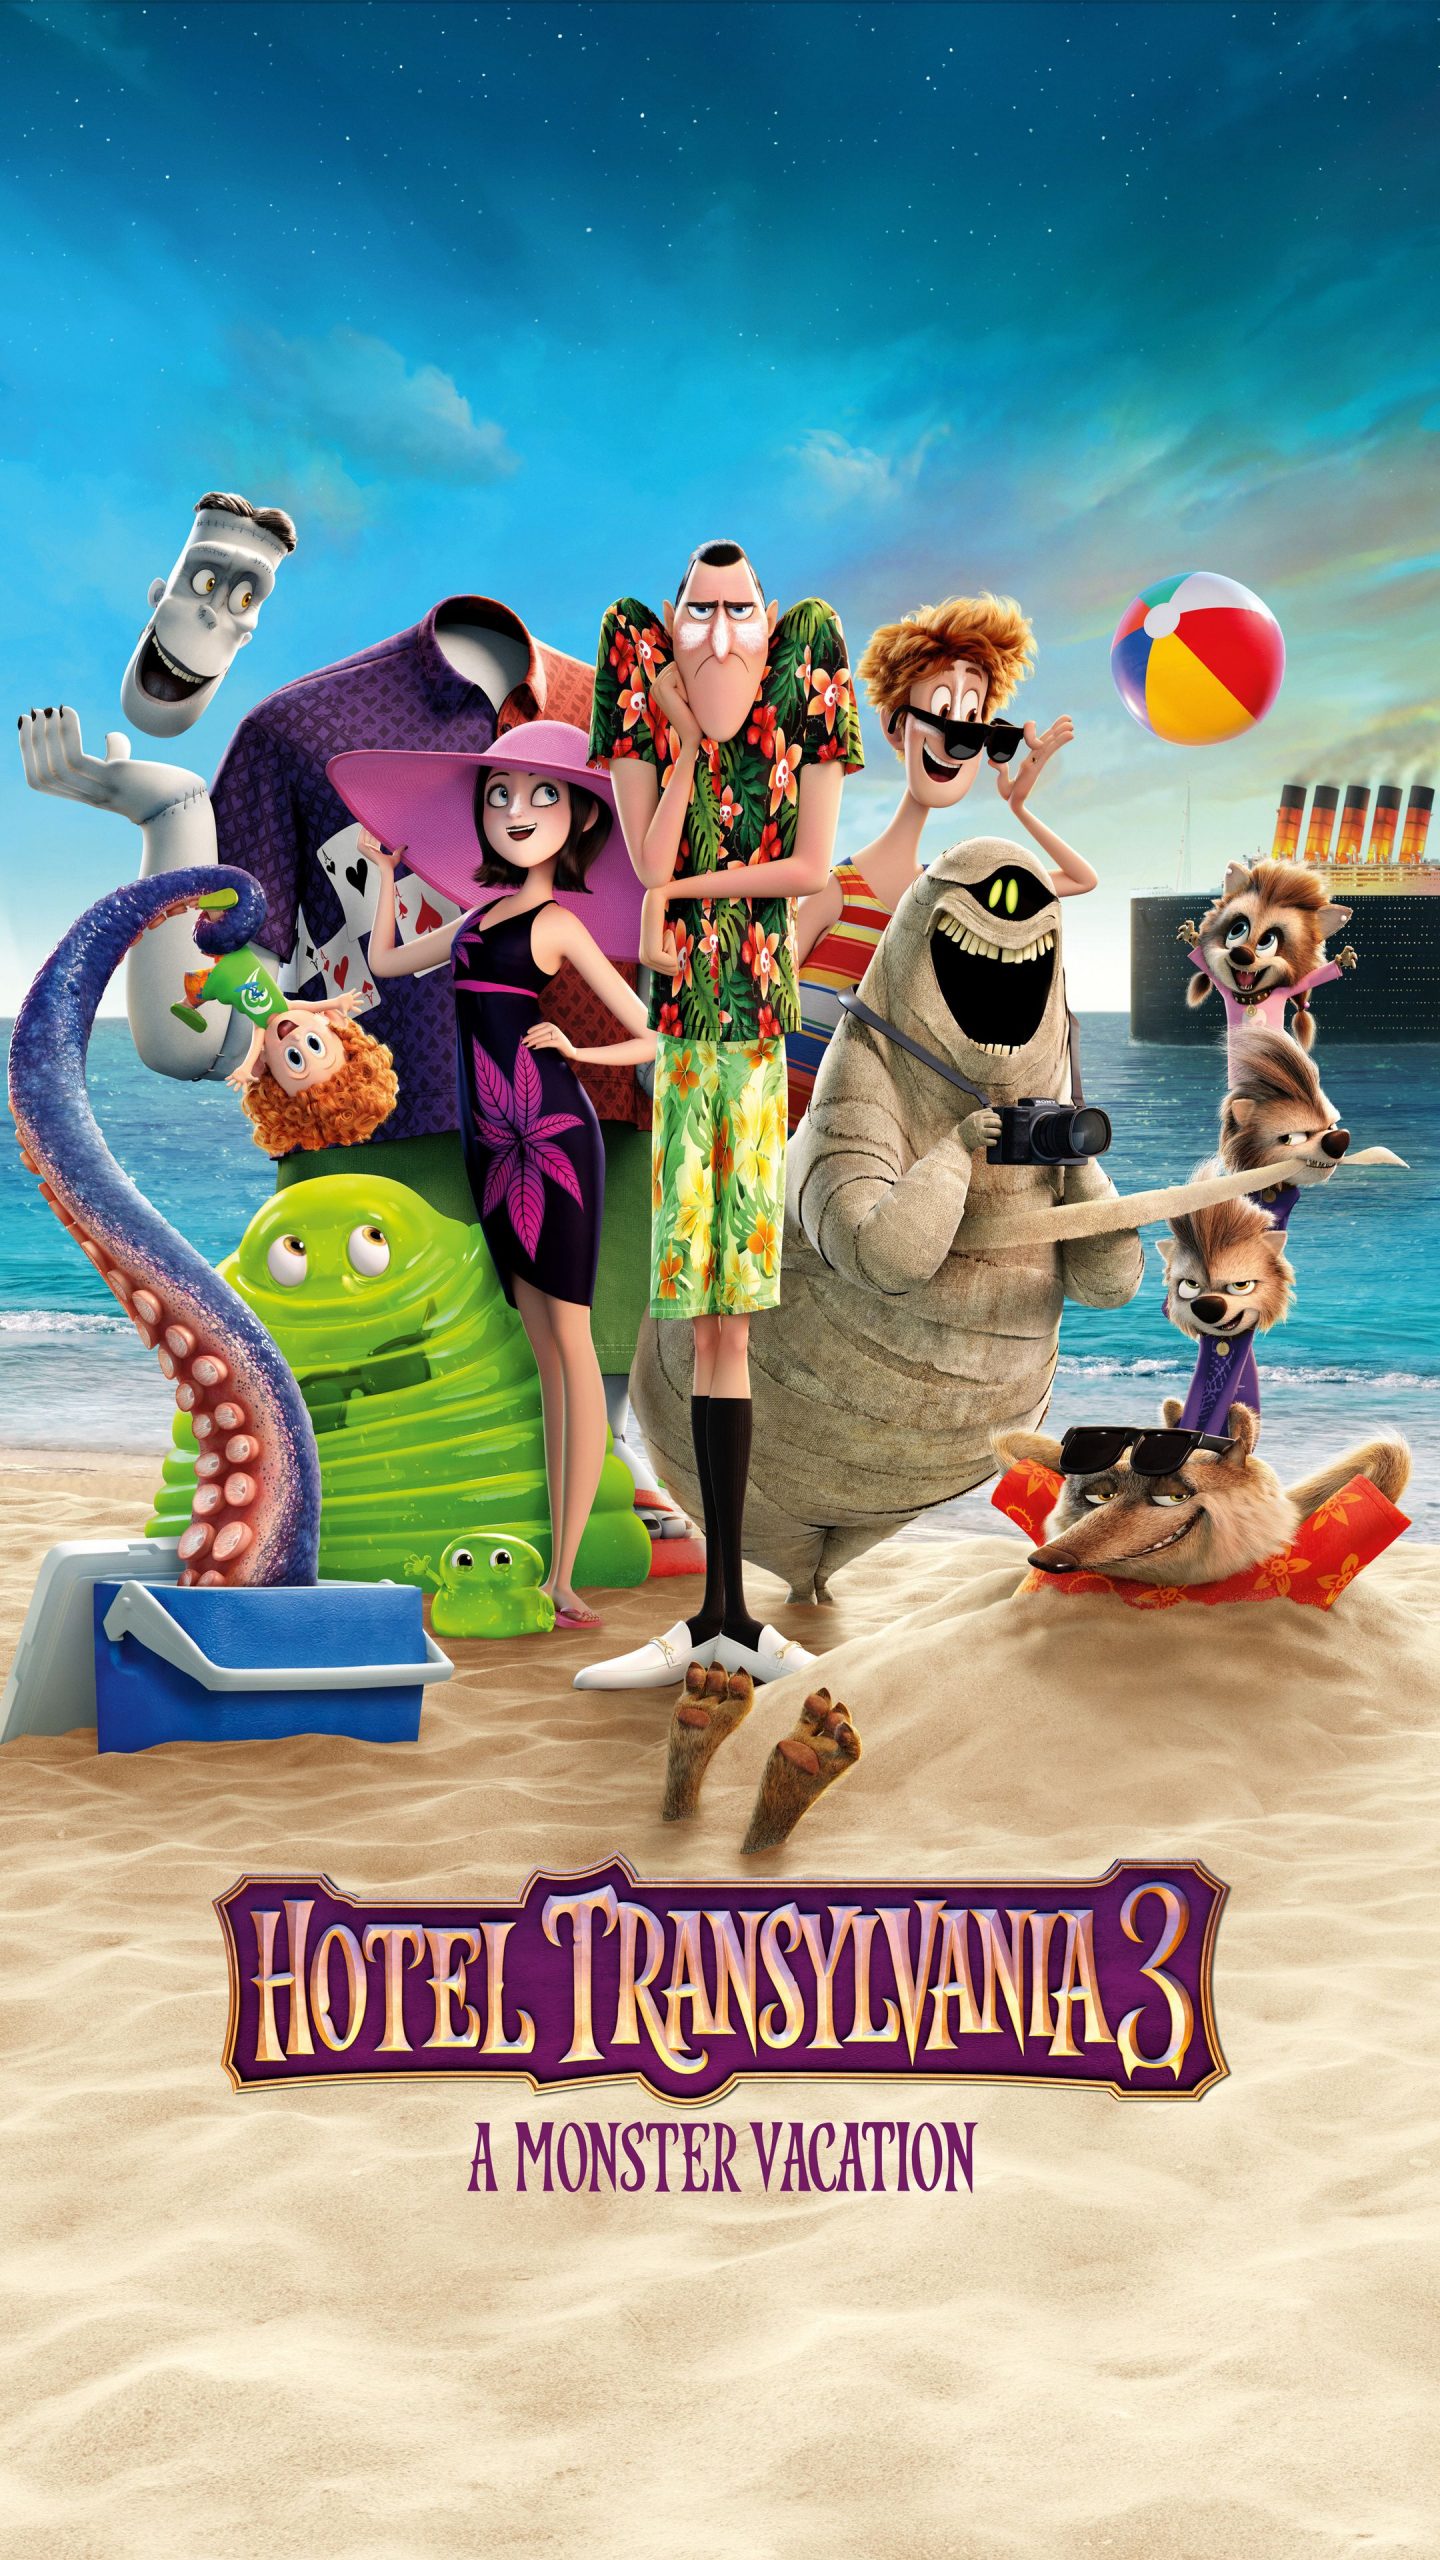 Transylvania movie hotel 4 full Watch Hotel